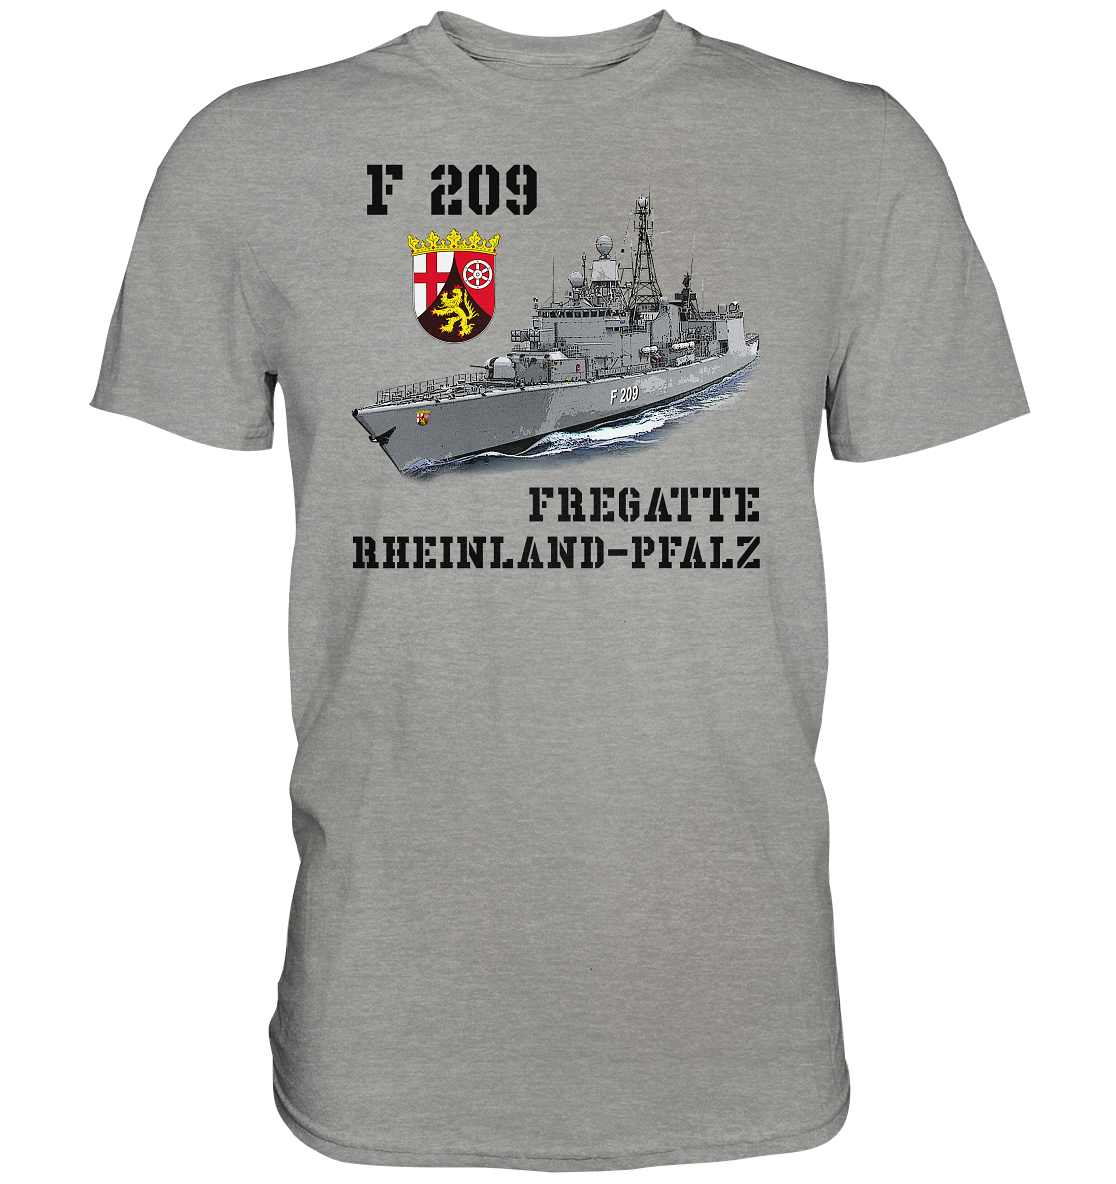 F209 Fregatte RHEINLAND-PFALZ - Premium Shirt